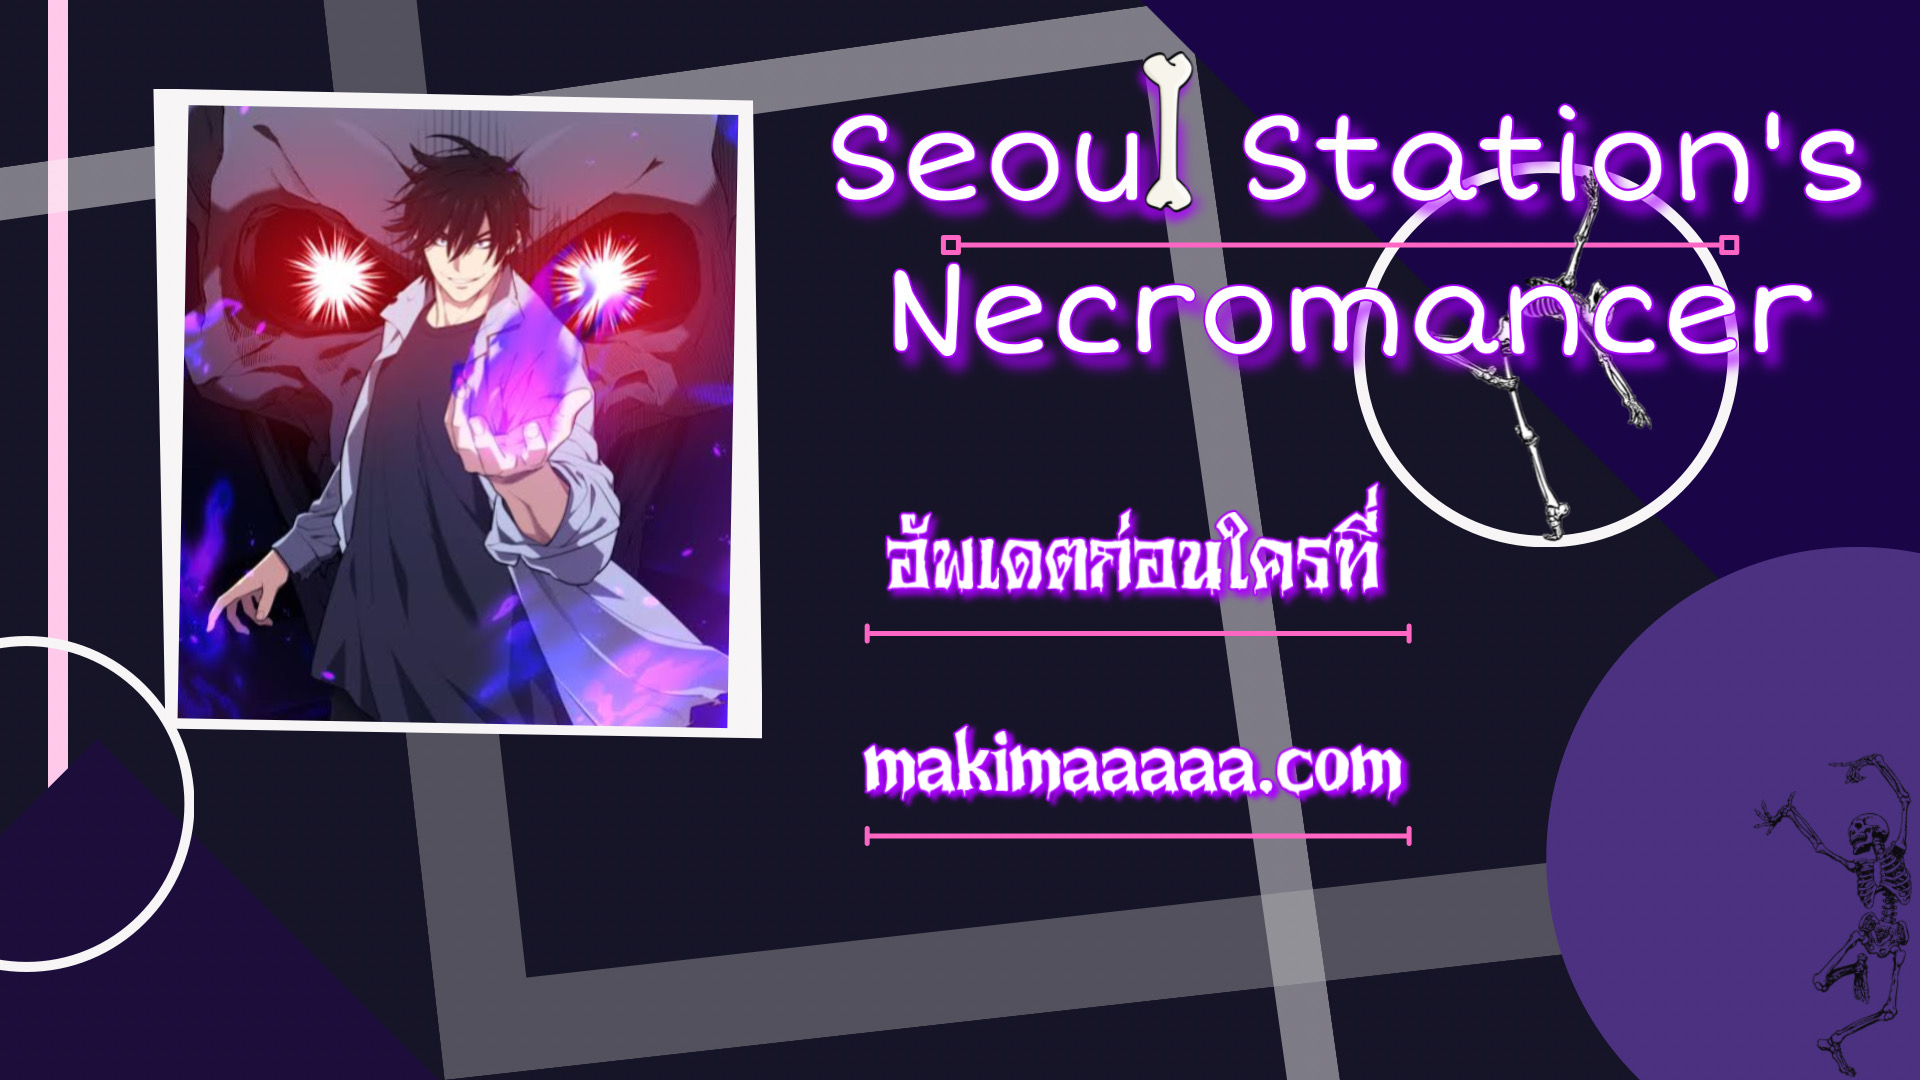 Seoul Stationâ€™s Necromancer12